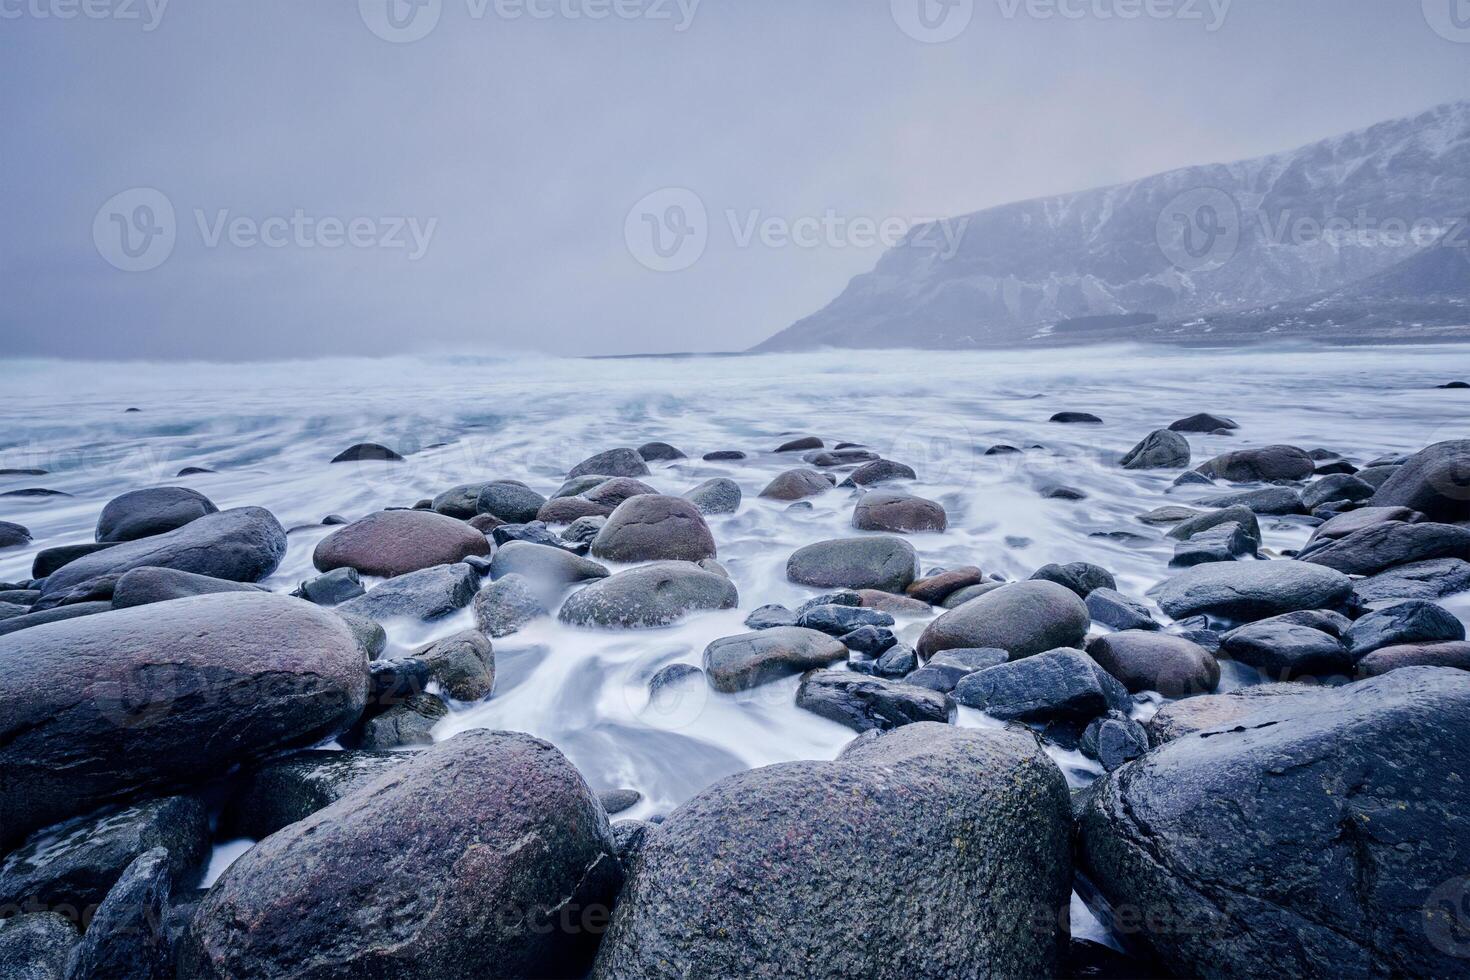 Waves of Norwegian sea surging on stone rocks. Long exposure photo